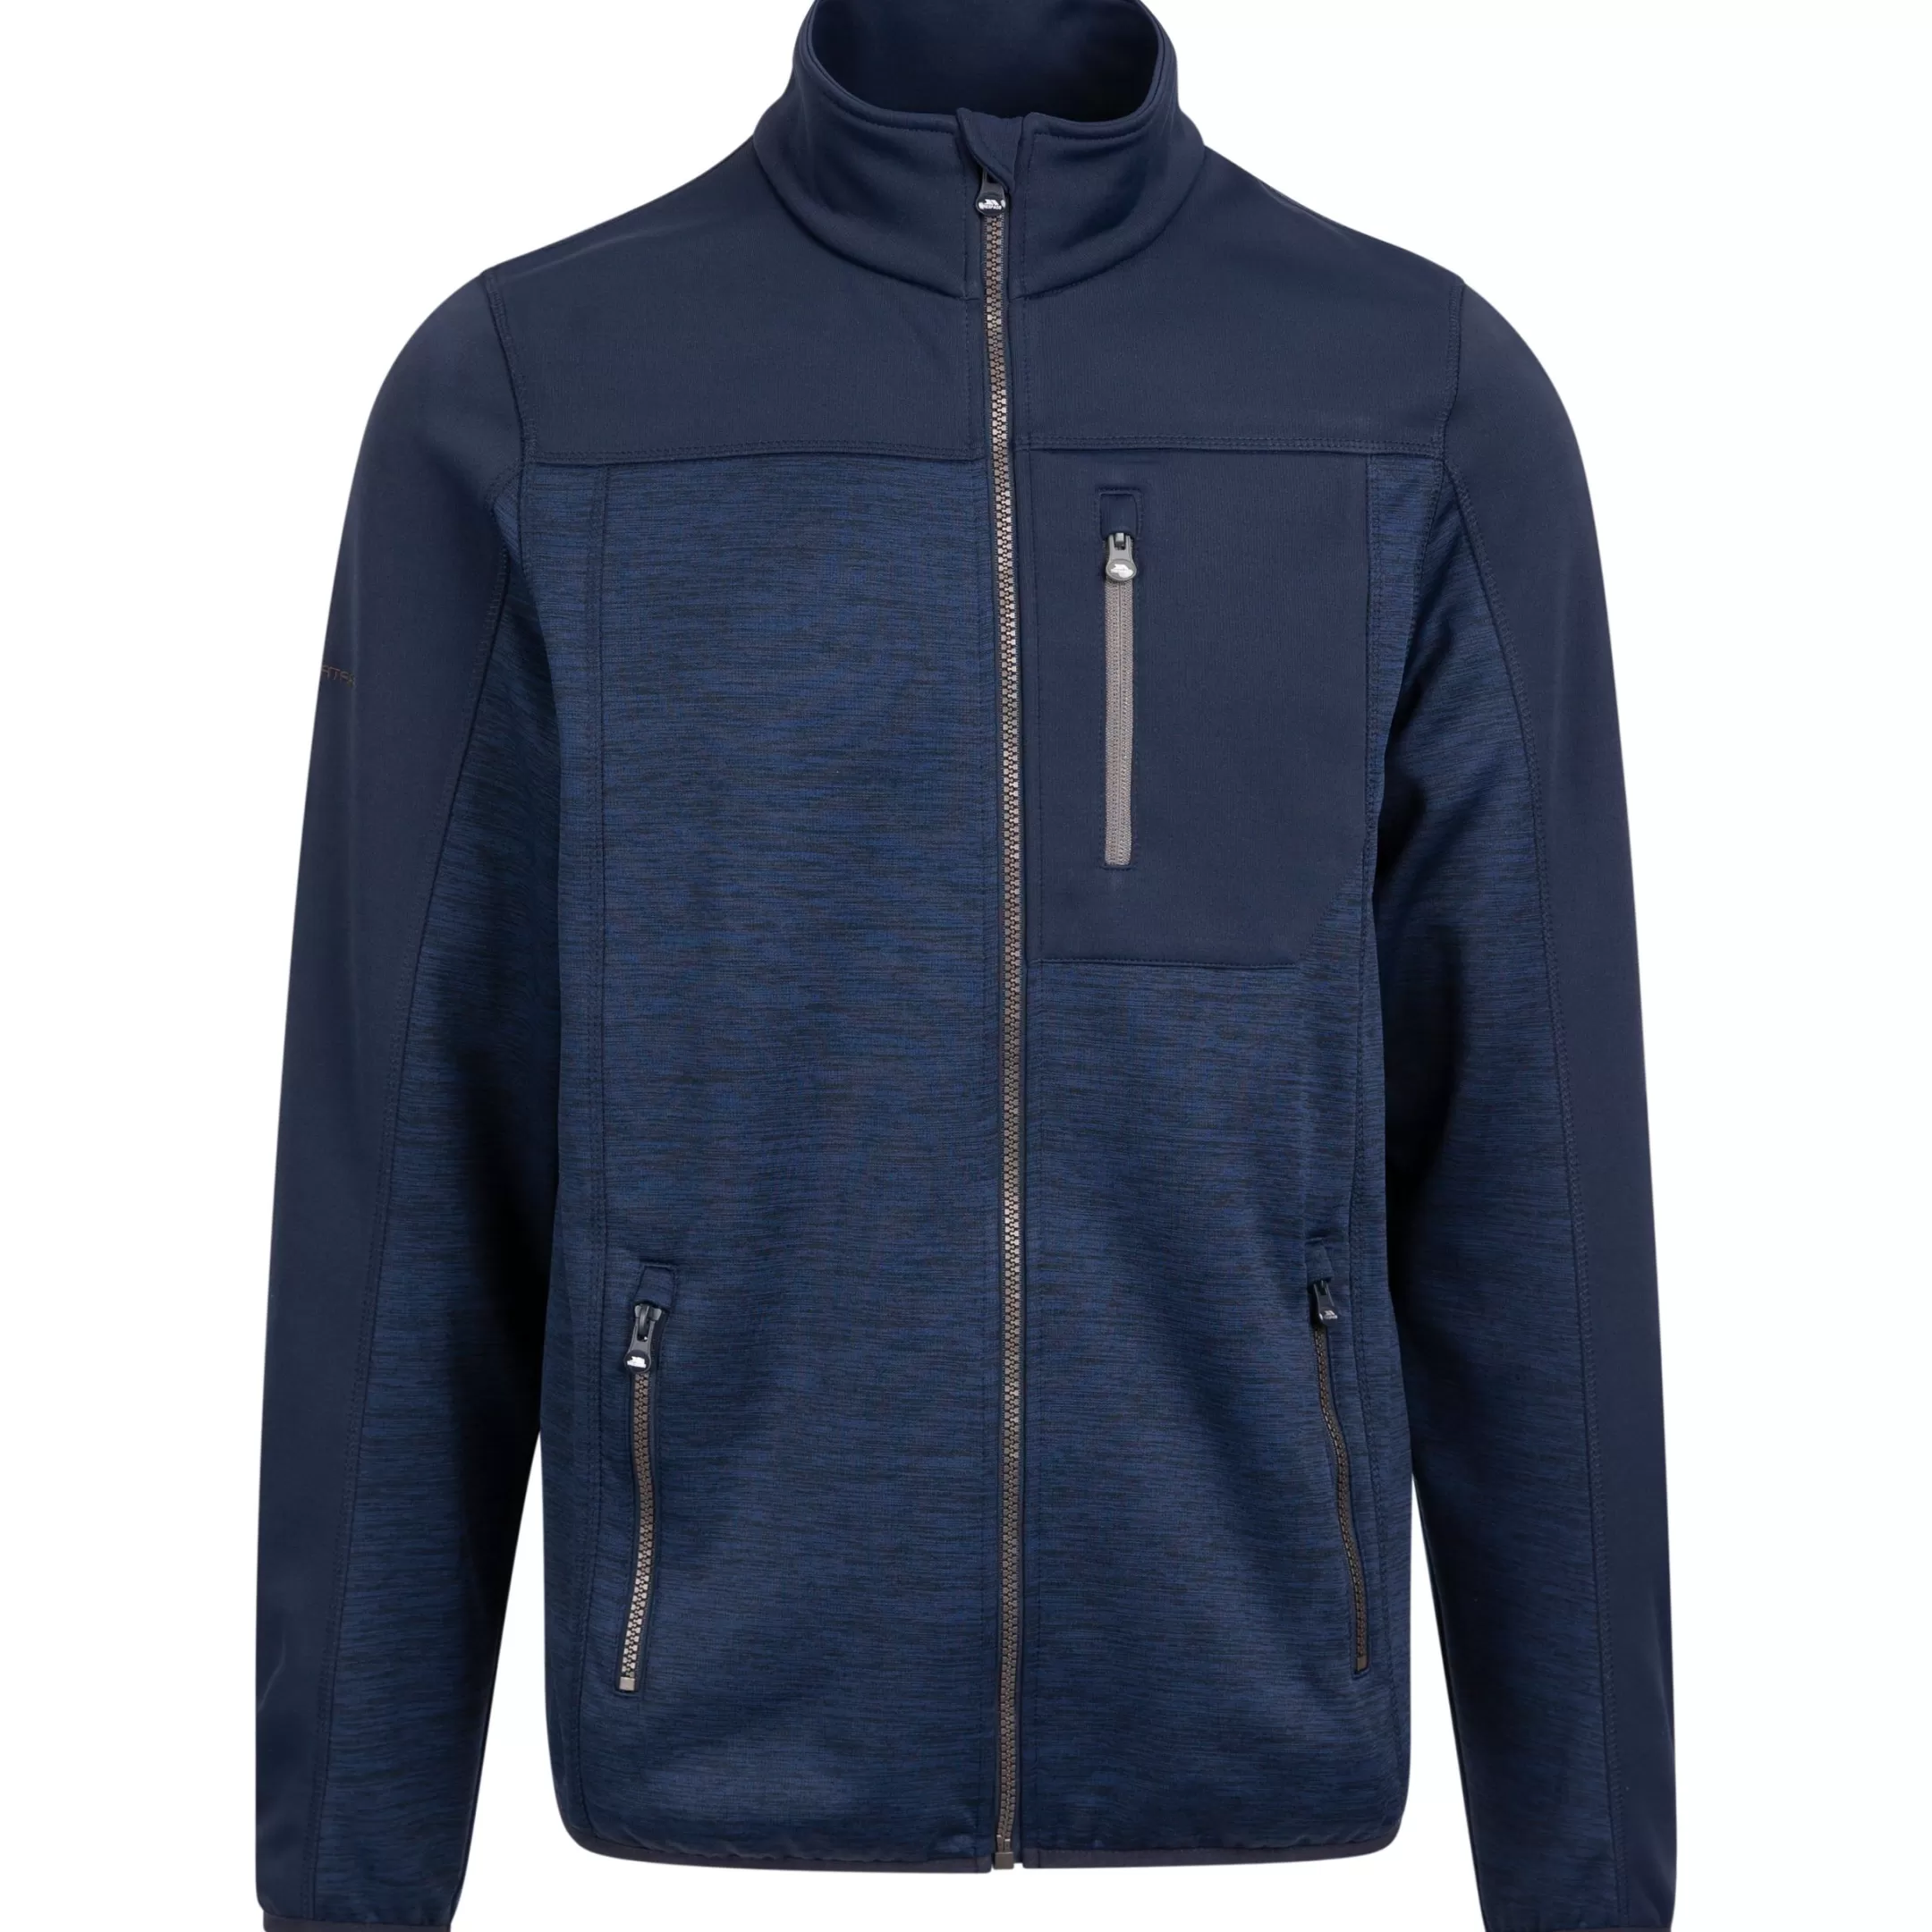 Men's Fleece Jacket AT200 Thornage | Trespass Flash Sale